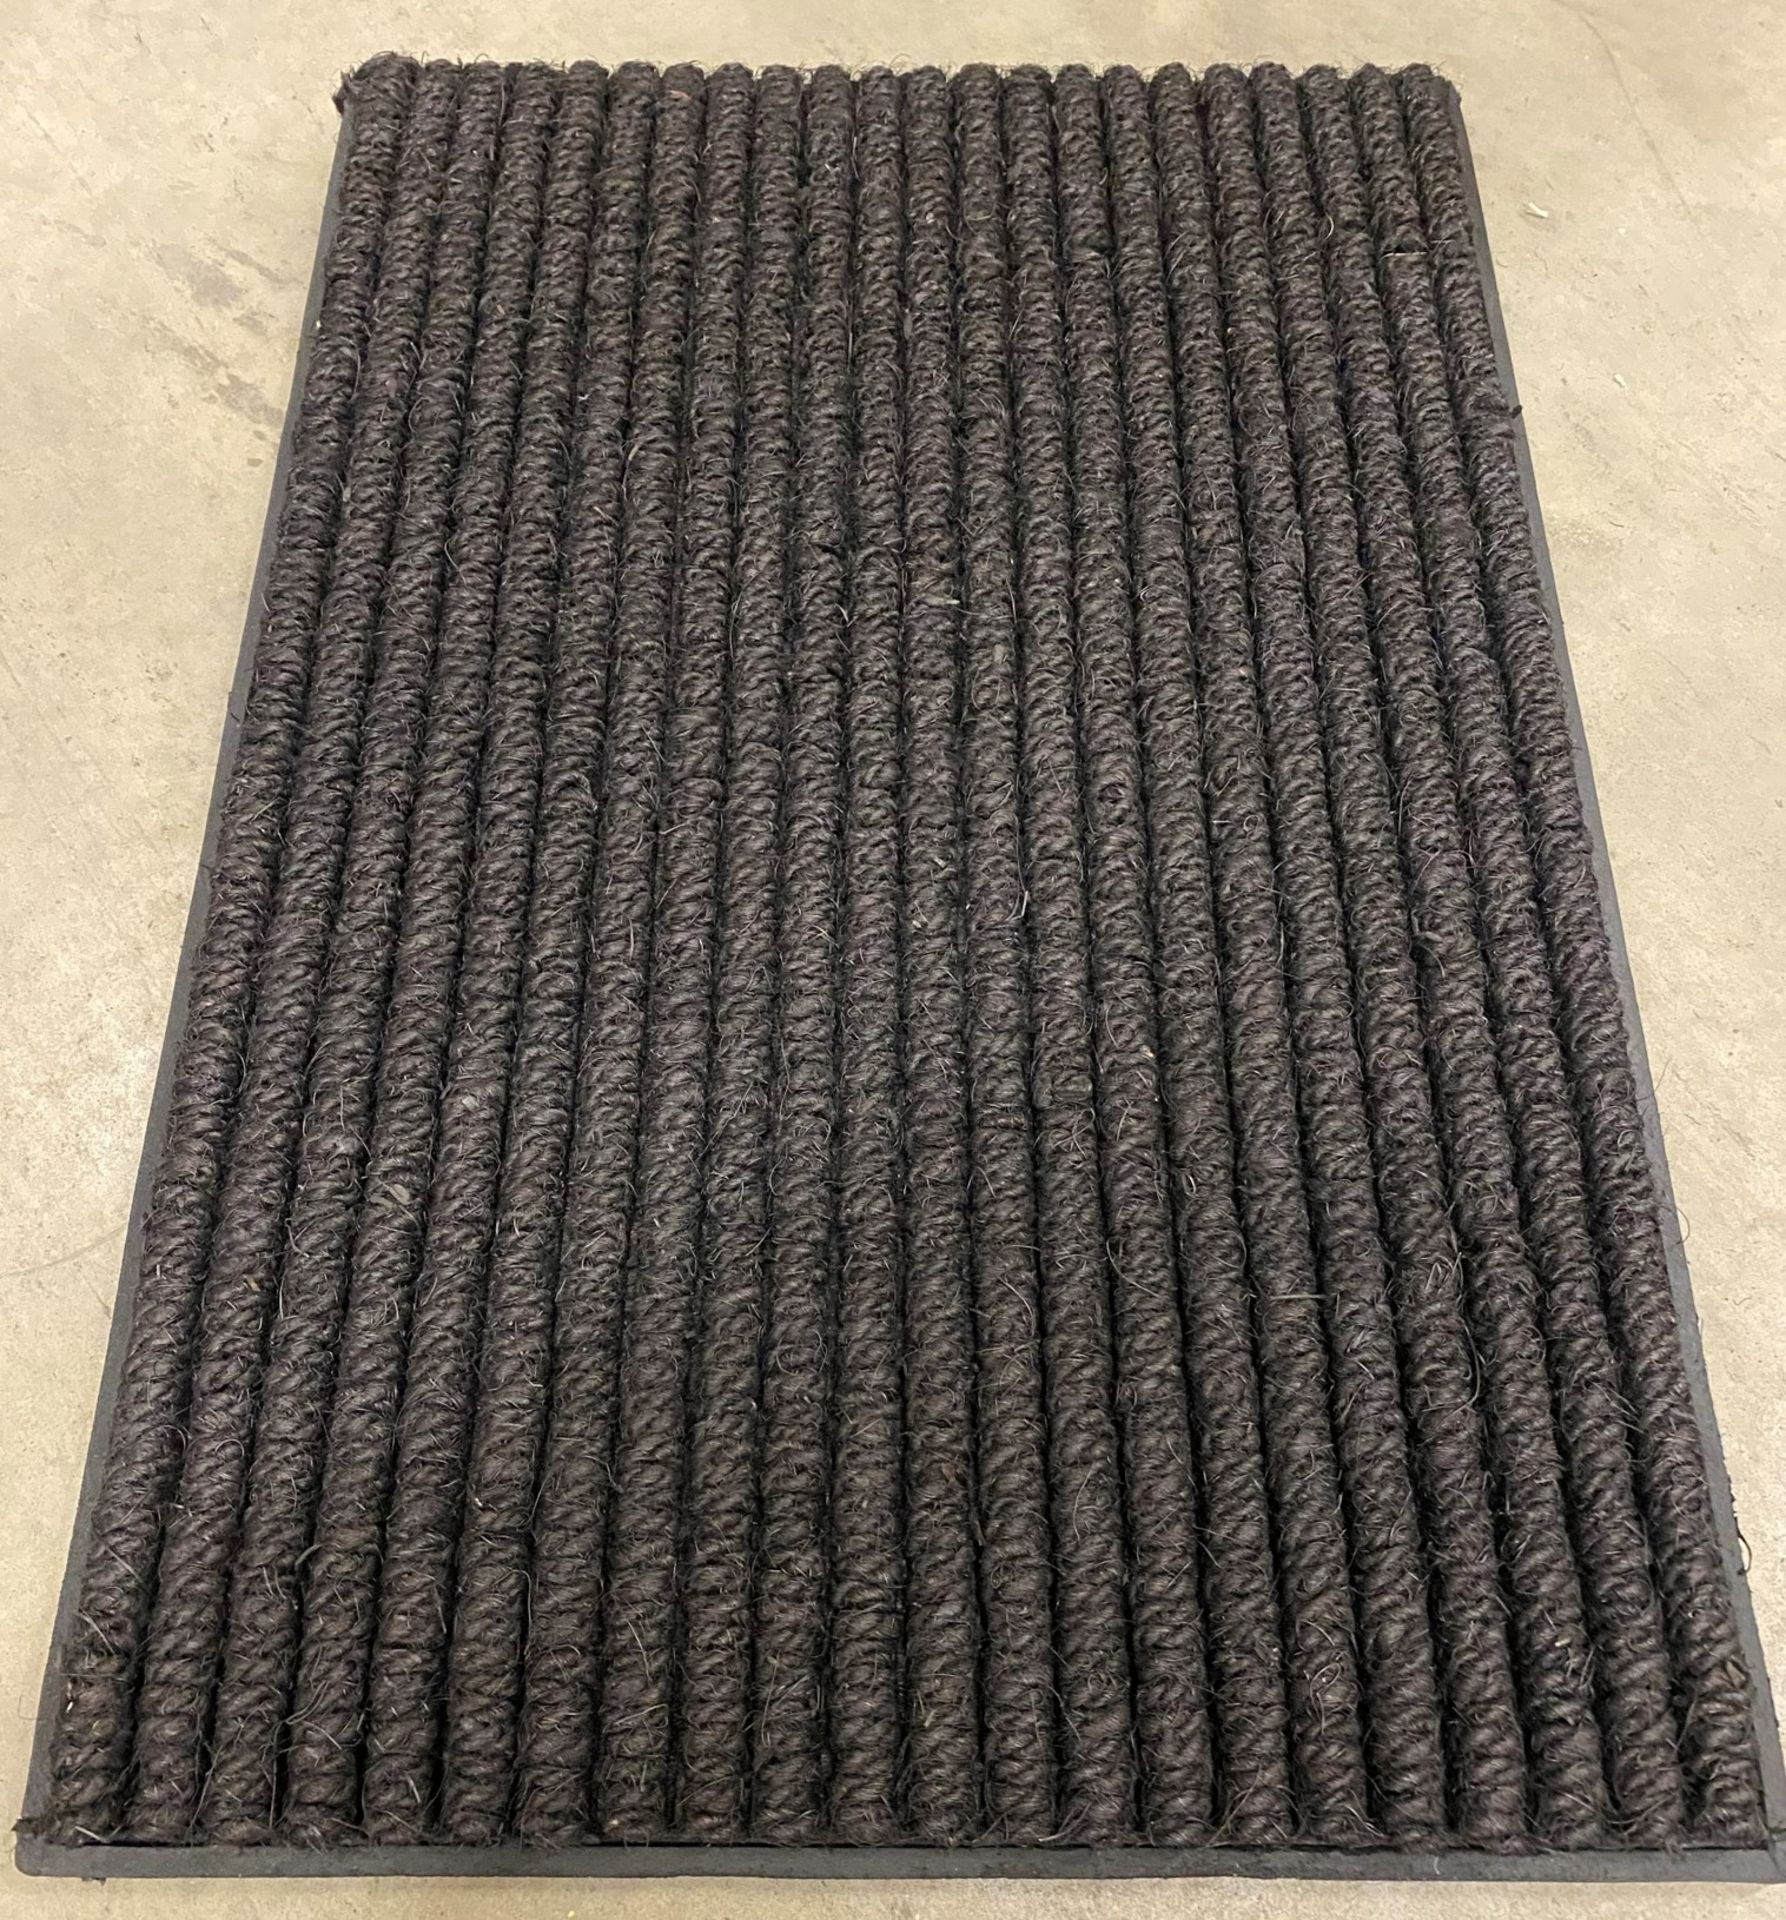 15 x Heavy Duty Looped Rubber Backed Doormats - 60cm x 40cm - Image 2 of 2